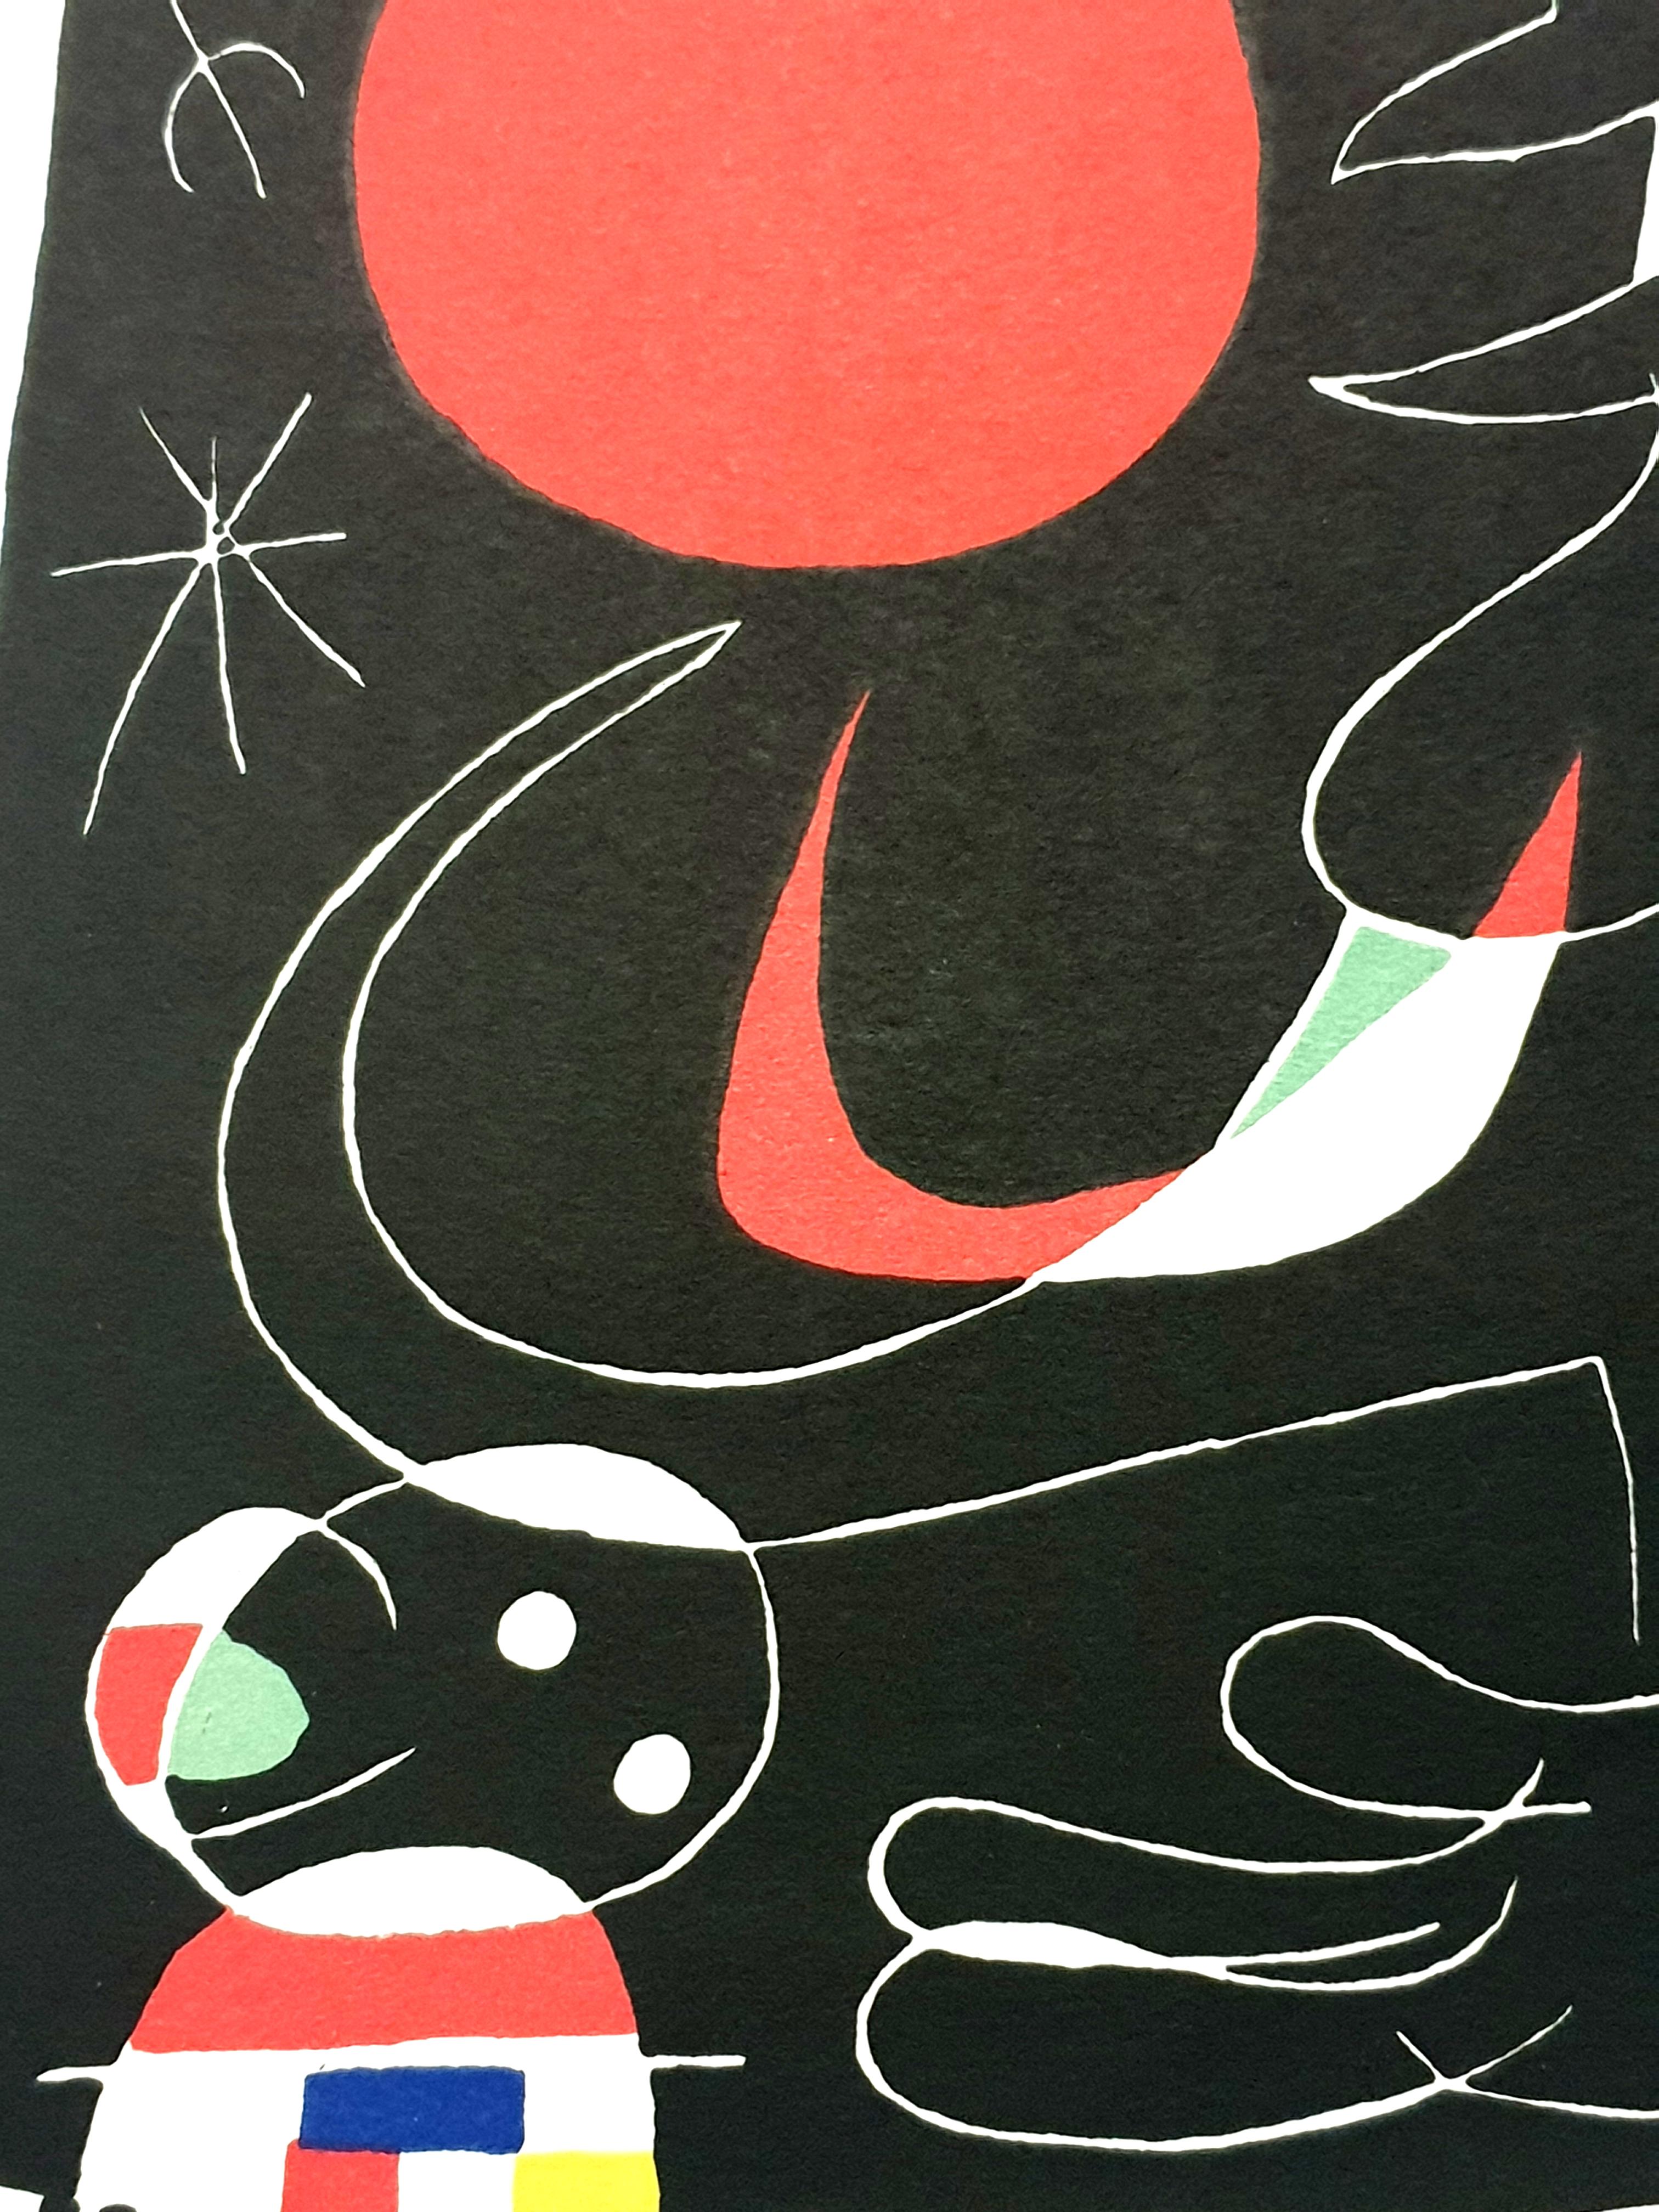 Joan Miro - Night Sky - Original Lithograph - Abstract Print by Joan Miró